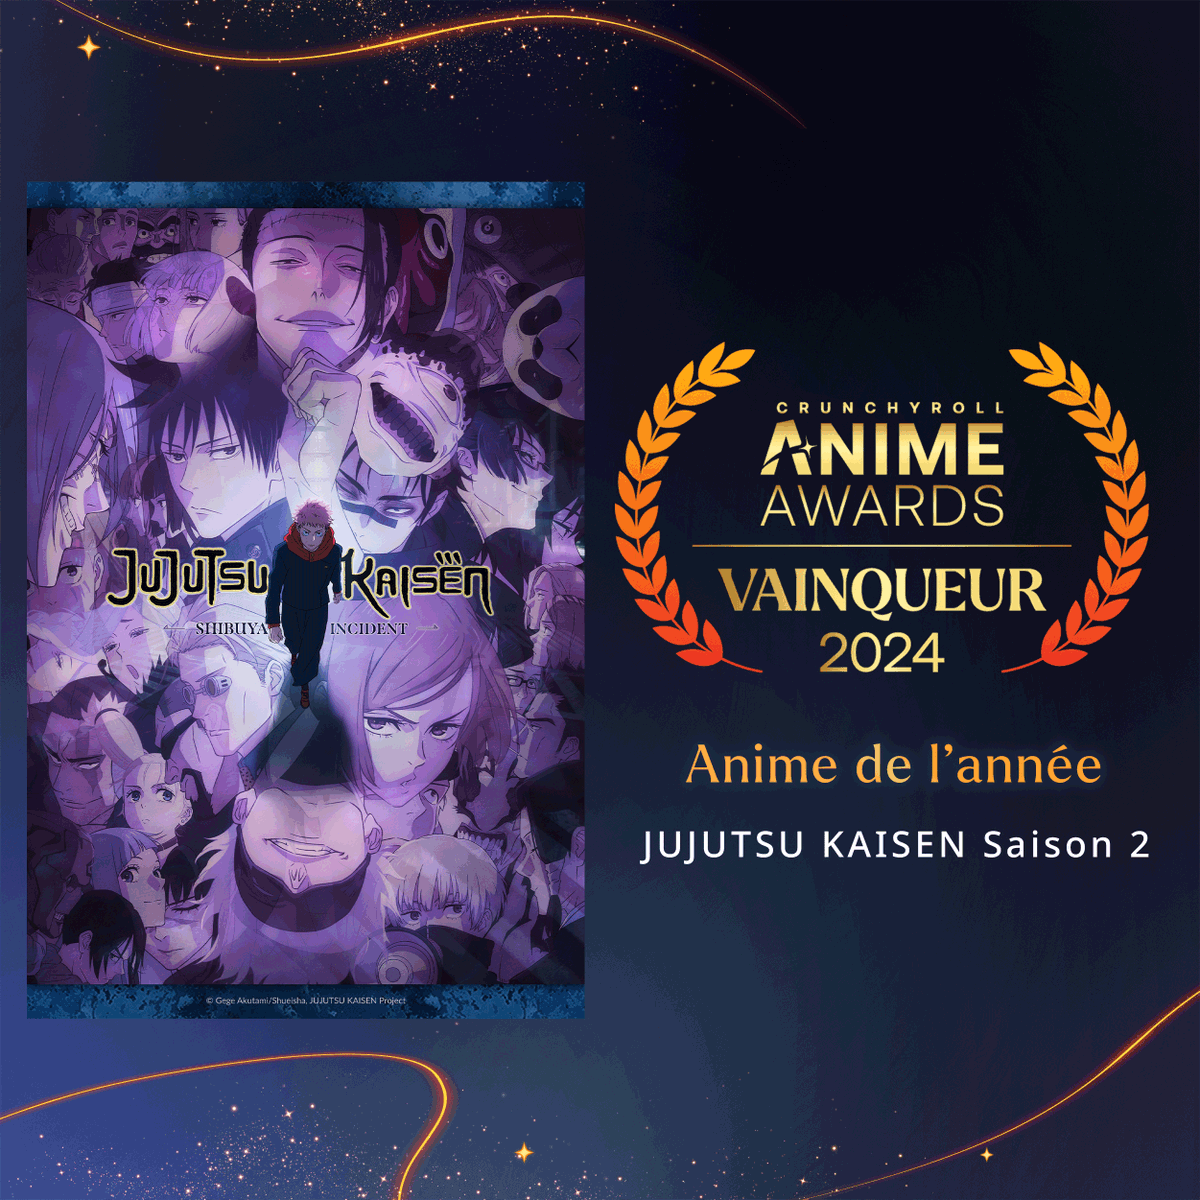 @SpyFamilyAnime @Chainsaw_FR @Jujutsu_anime @kimetsu_fr @ADNanime LE GRAND GAGNANT DE L'ANNÉE EST LÀ. 👏 Jujutsu Kaisen S2 remporte l'Award de l'Anime de l'Année ! 🏆 #animeawards